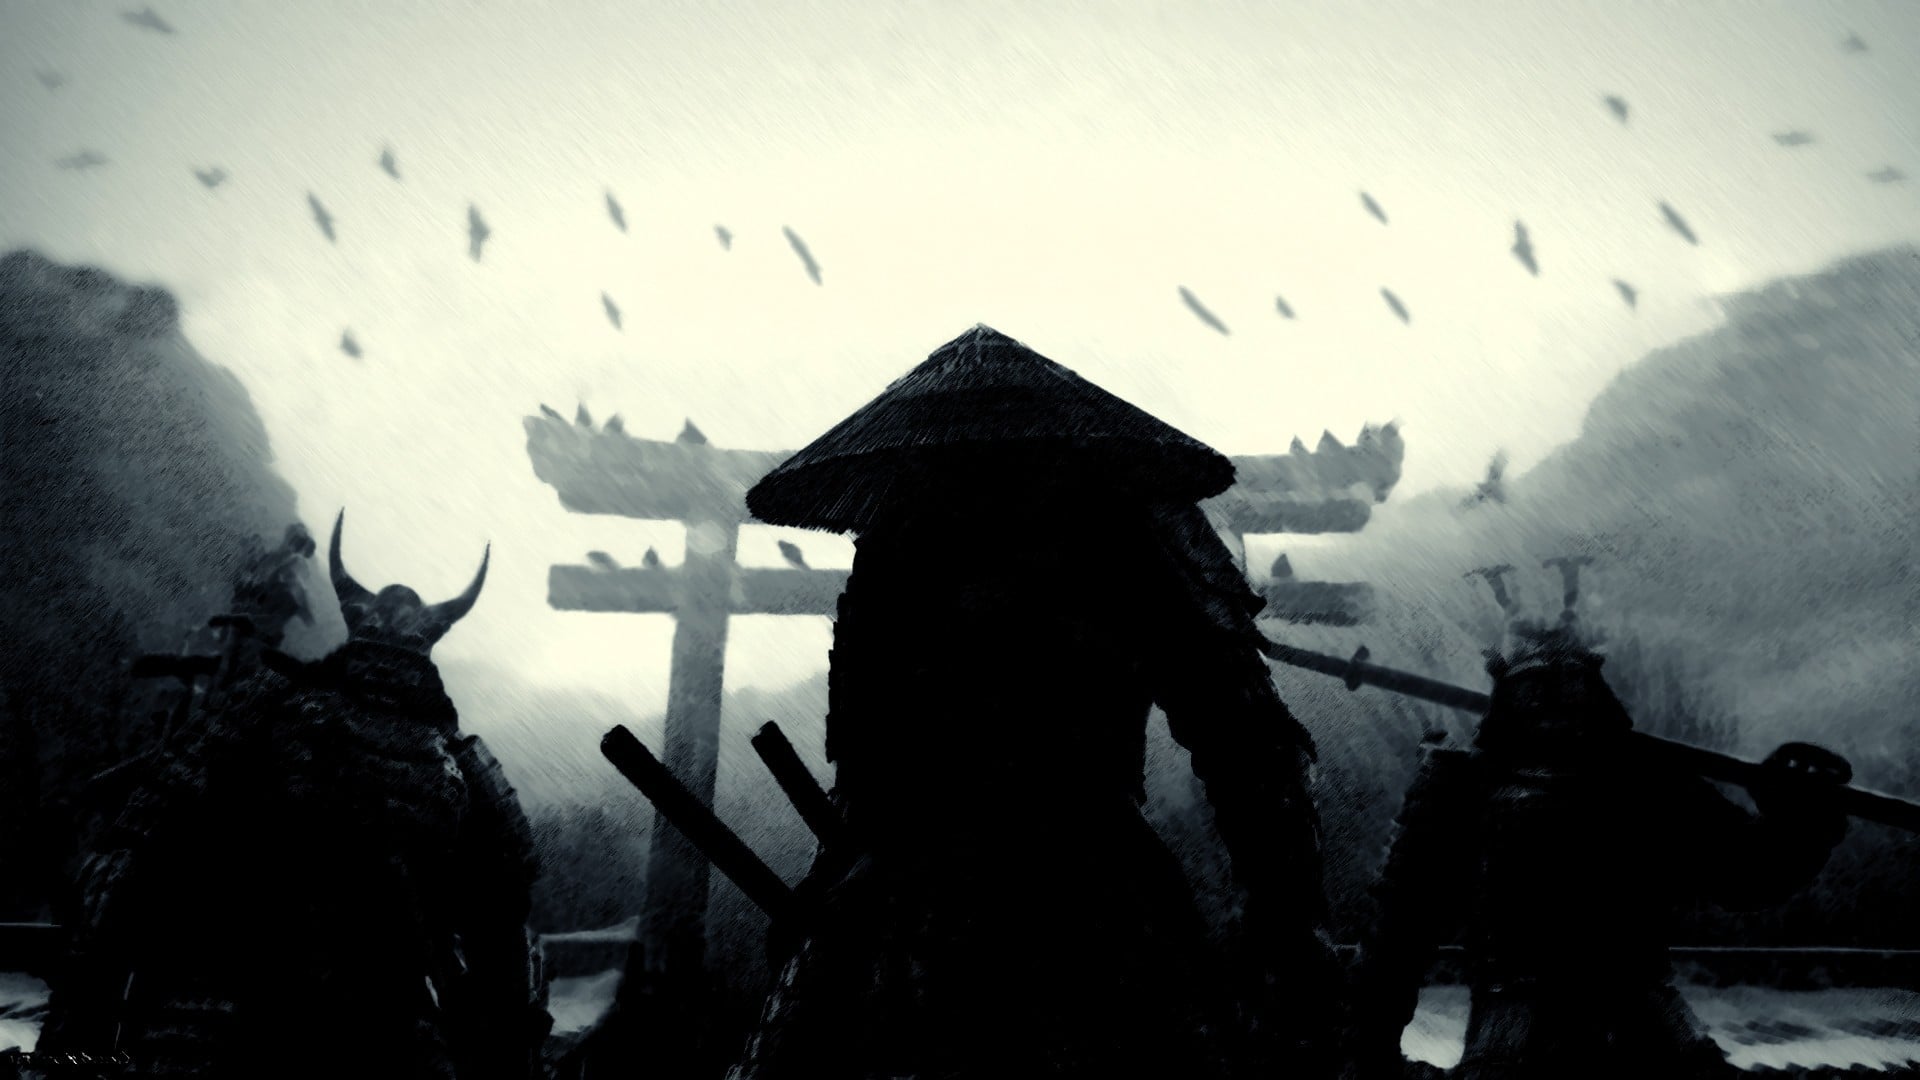 Samurai Wallpaper HD